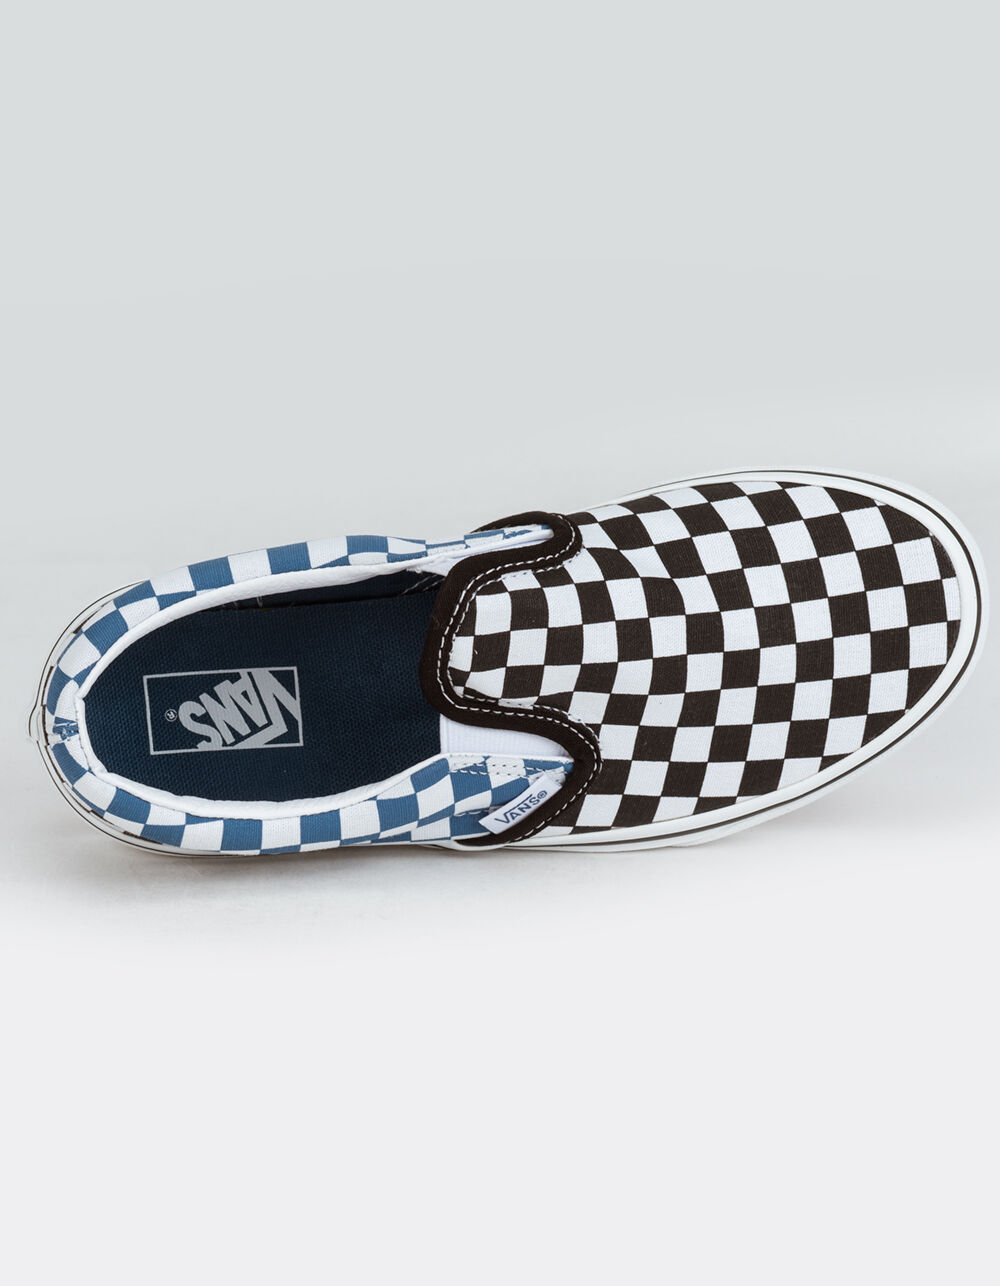 VANS Checkerboard Classic Slip-On Juniors Shoes - BLACK/BLUE | Tillys